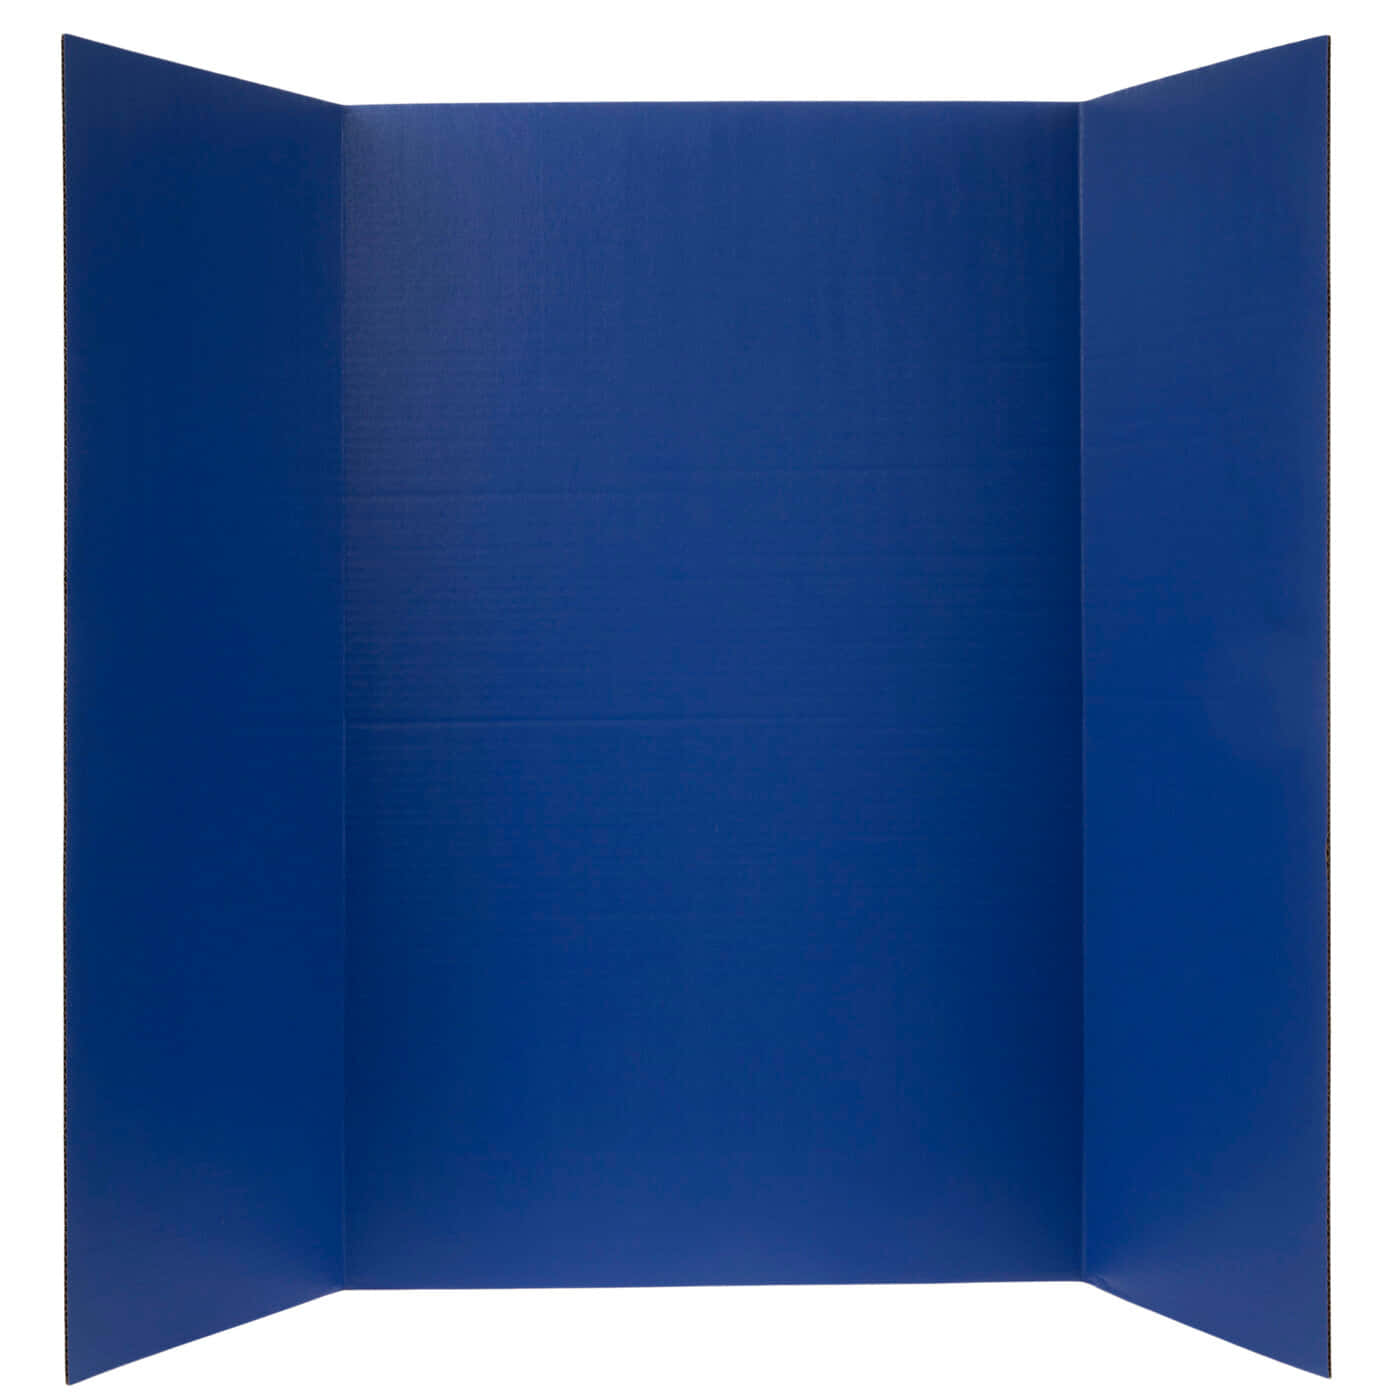 A Blue Folding Board On A White Background